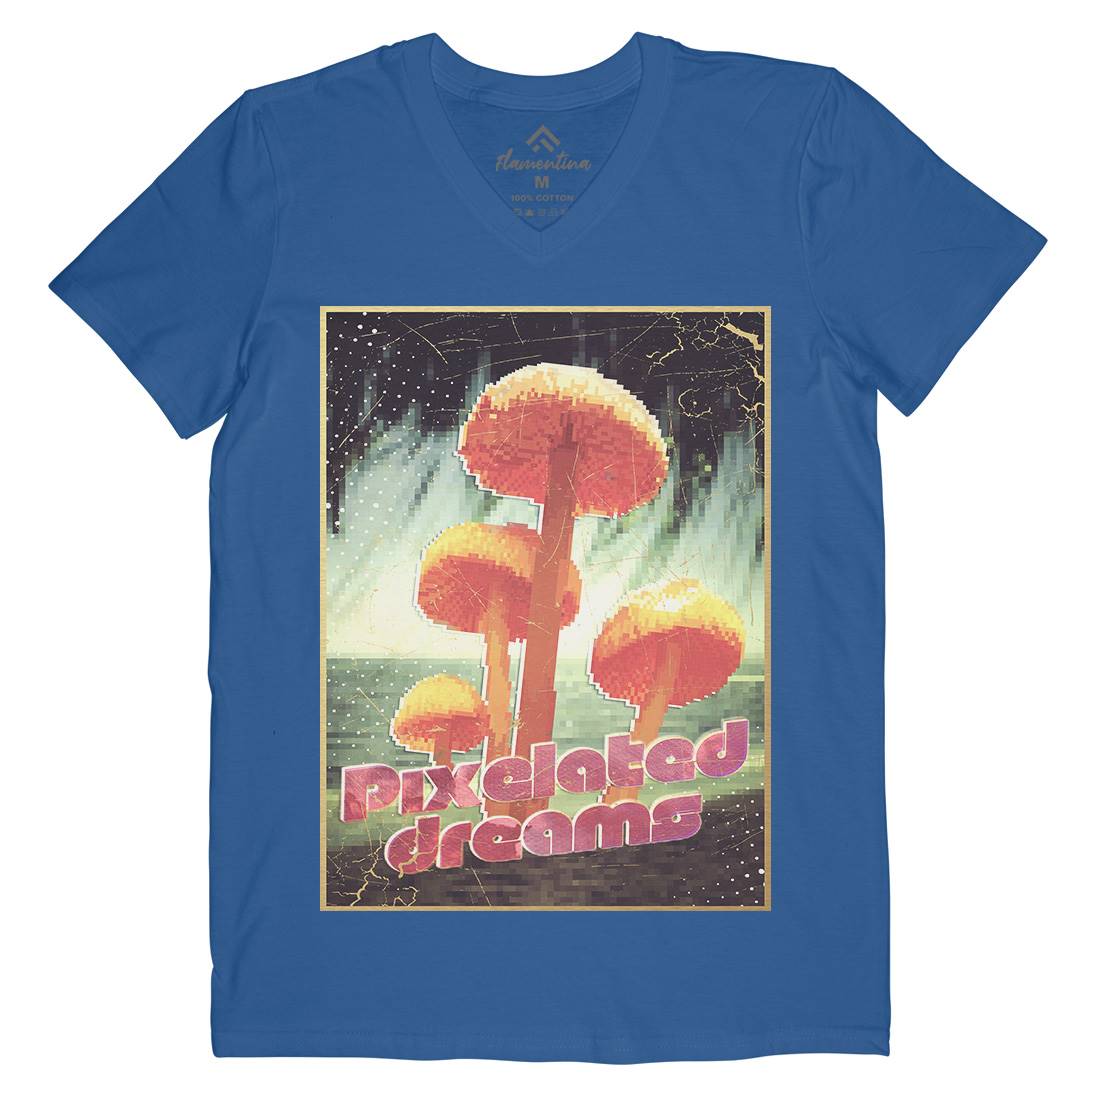 Pixelated Dreams Mens V-Neck T-Shirt Drugs A893